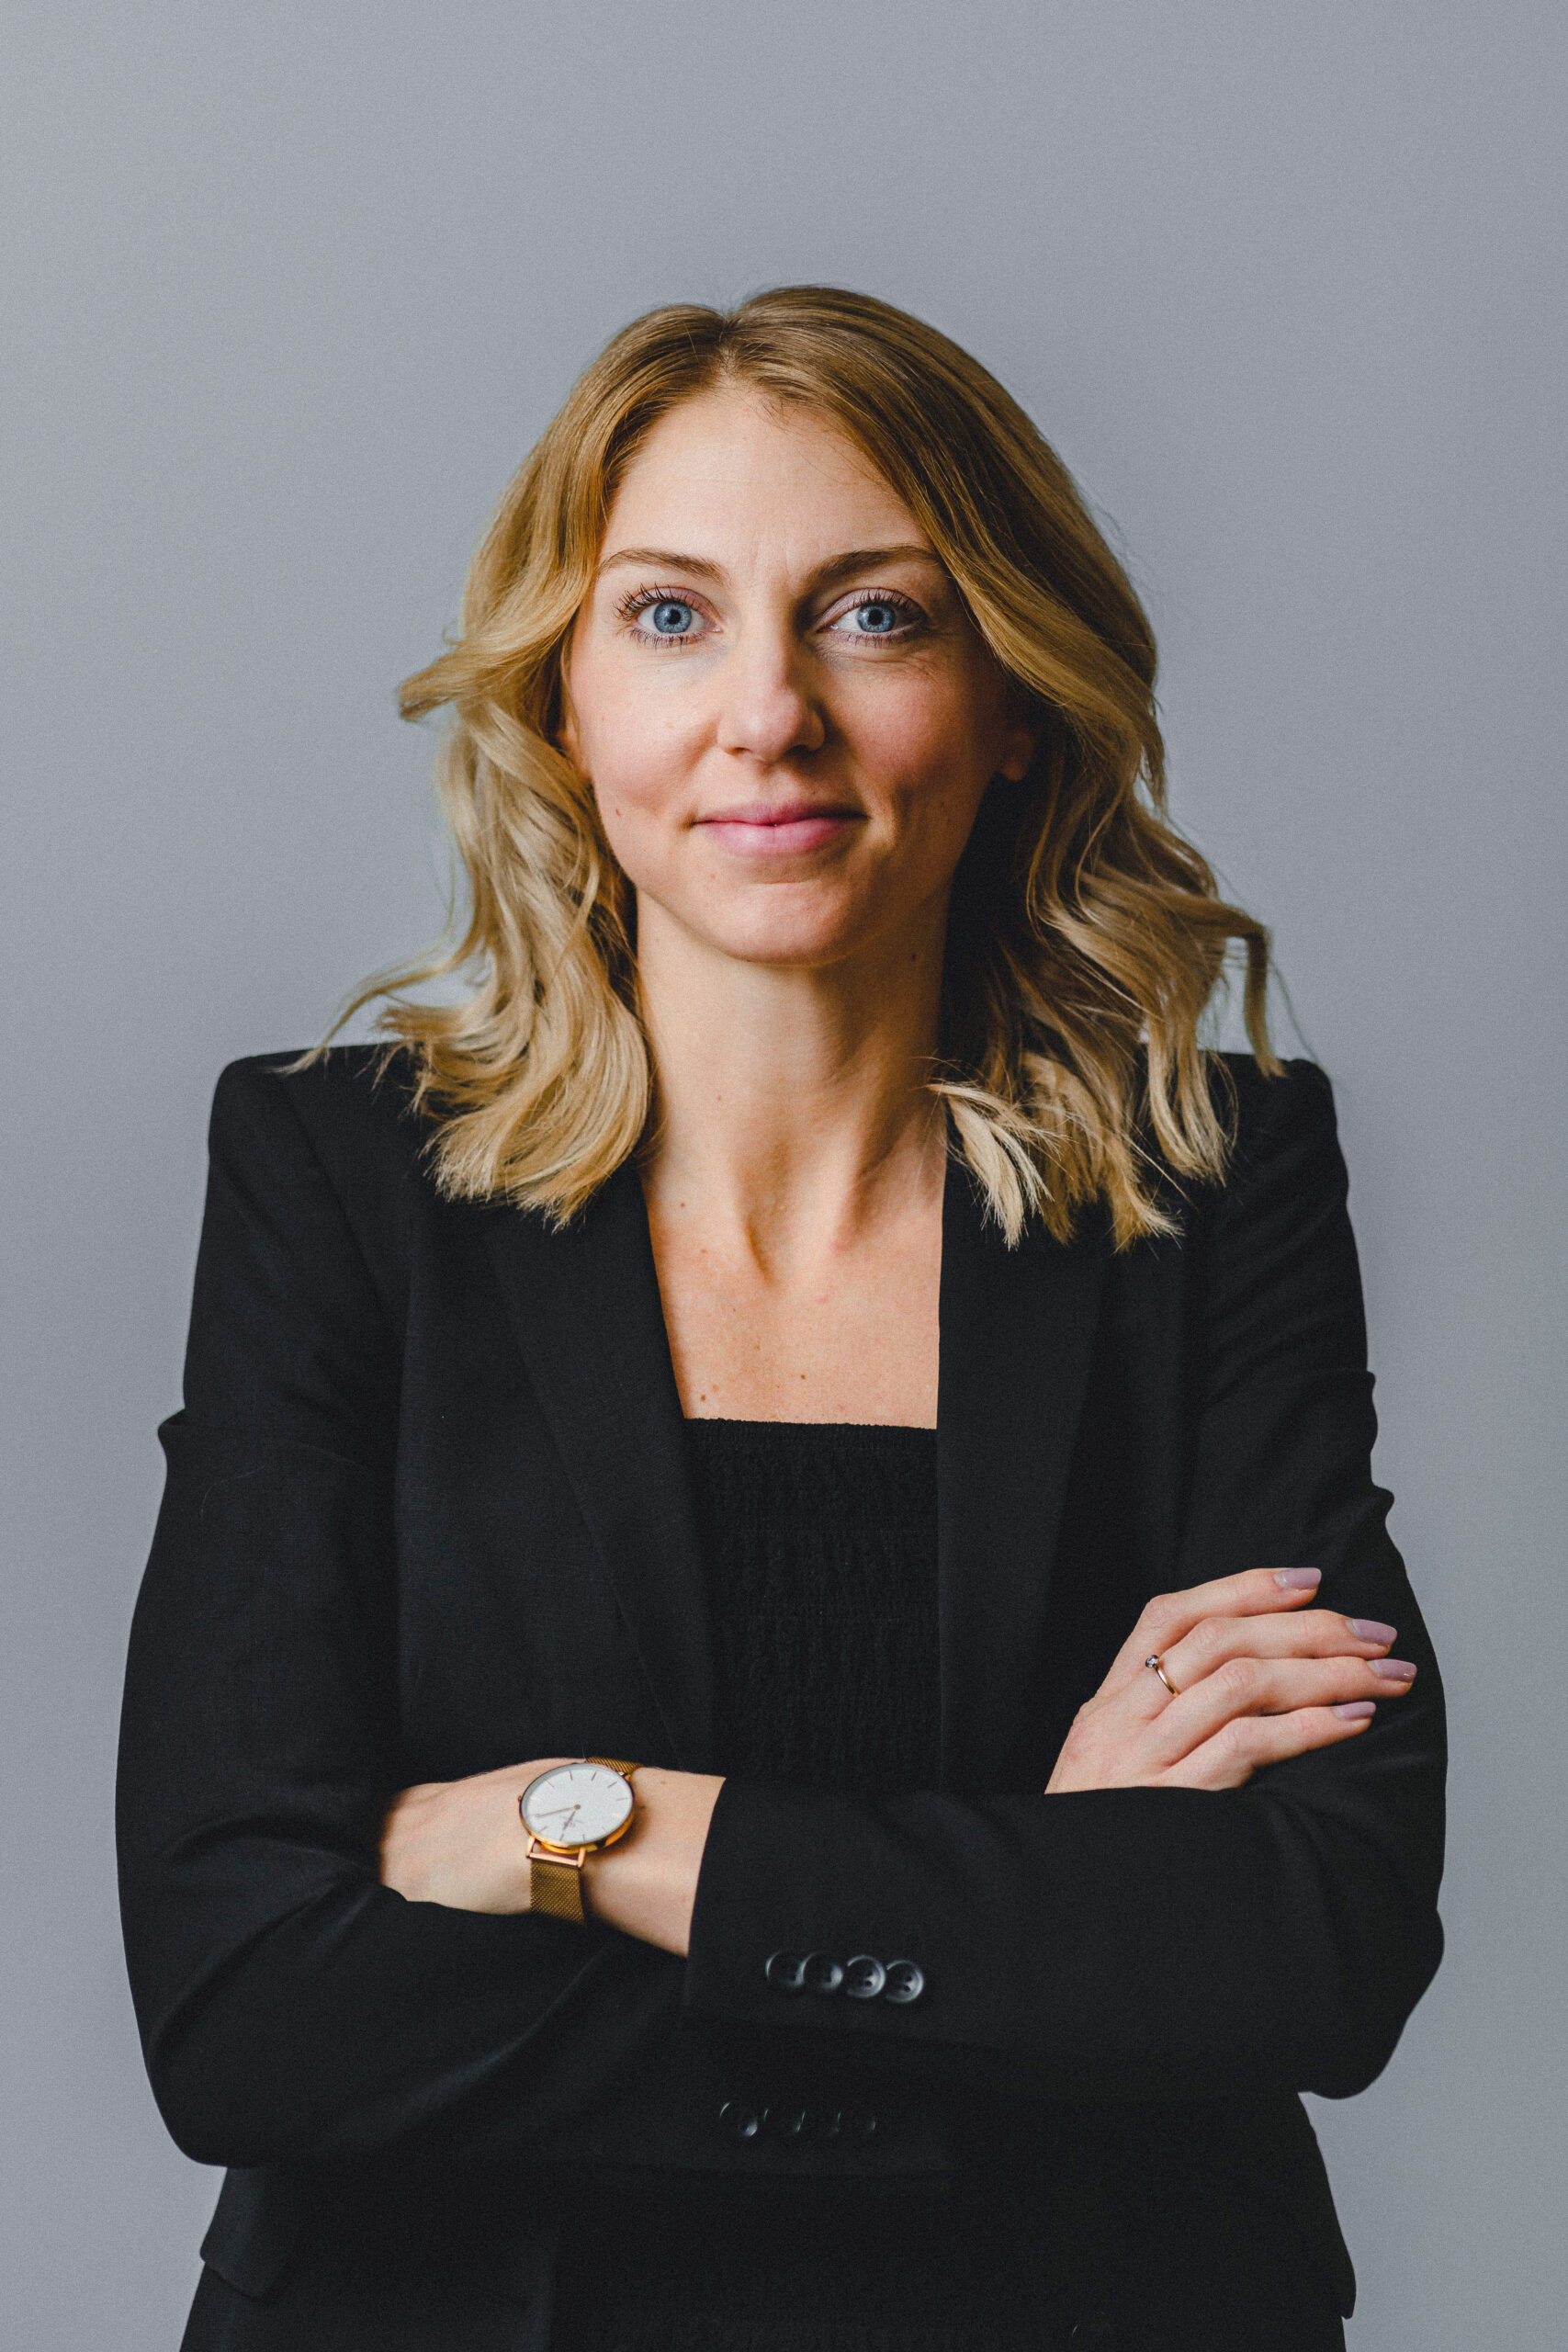 Biträdande jurist Melissa Johansson